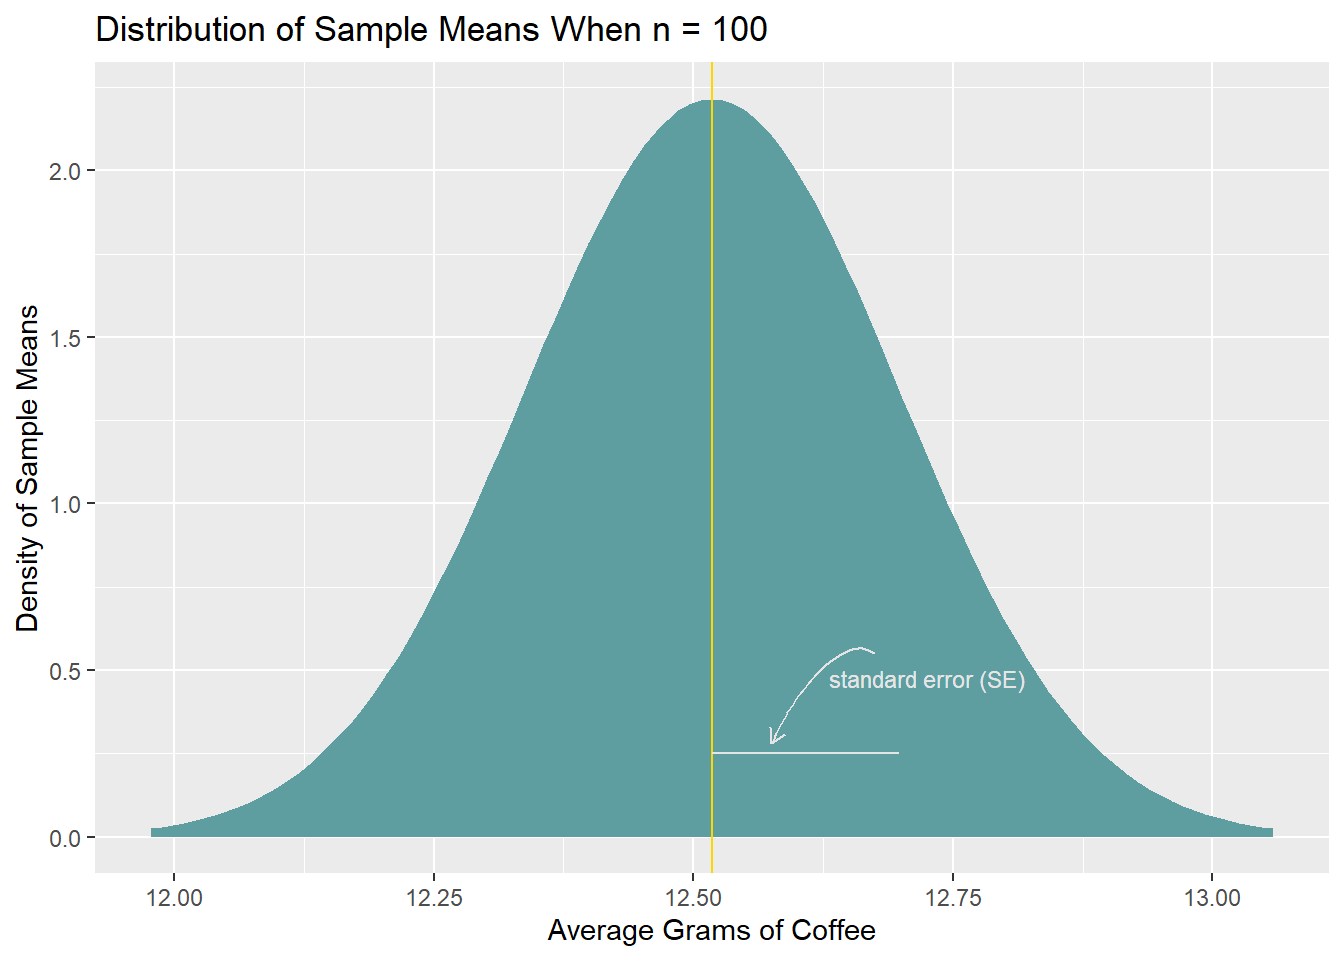 sampling distribution of average grams of coffee used, n = 100 per sample, with standard error superimposed